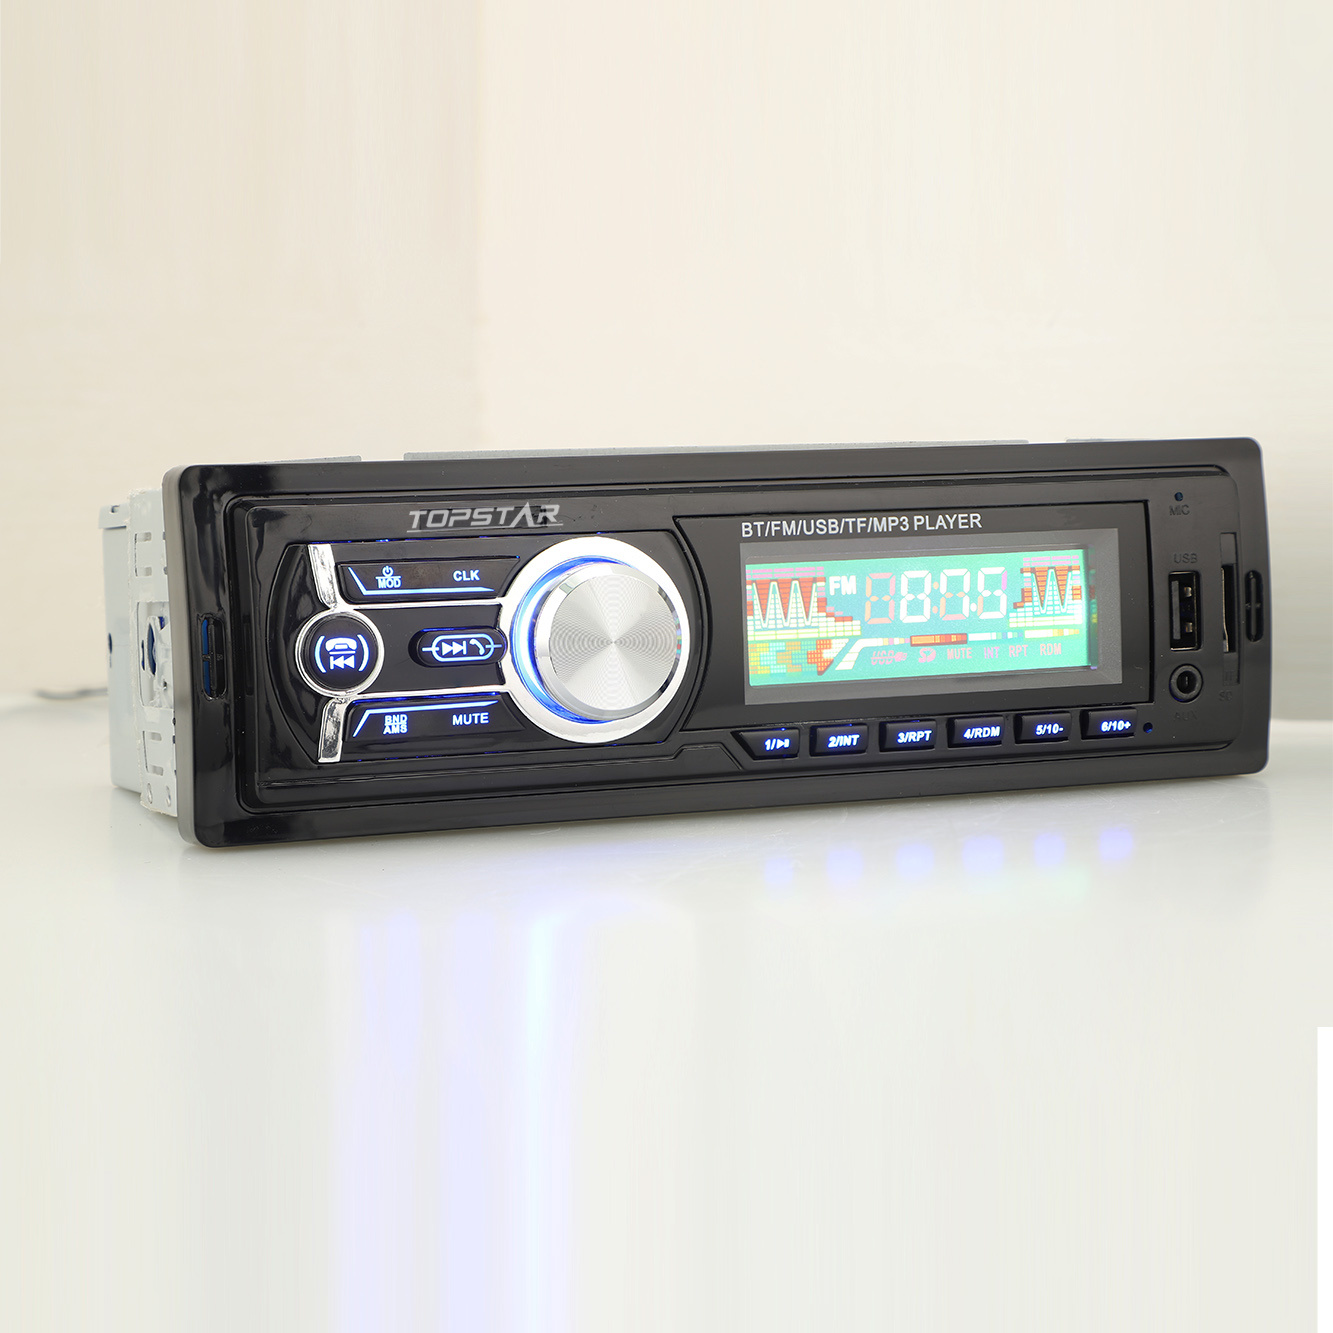 Áudio automático rádio do carro conjuntos de áudio do carro estéreo transmissor fm áudio áudio automático único din carro mp3 player